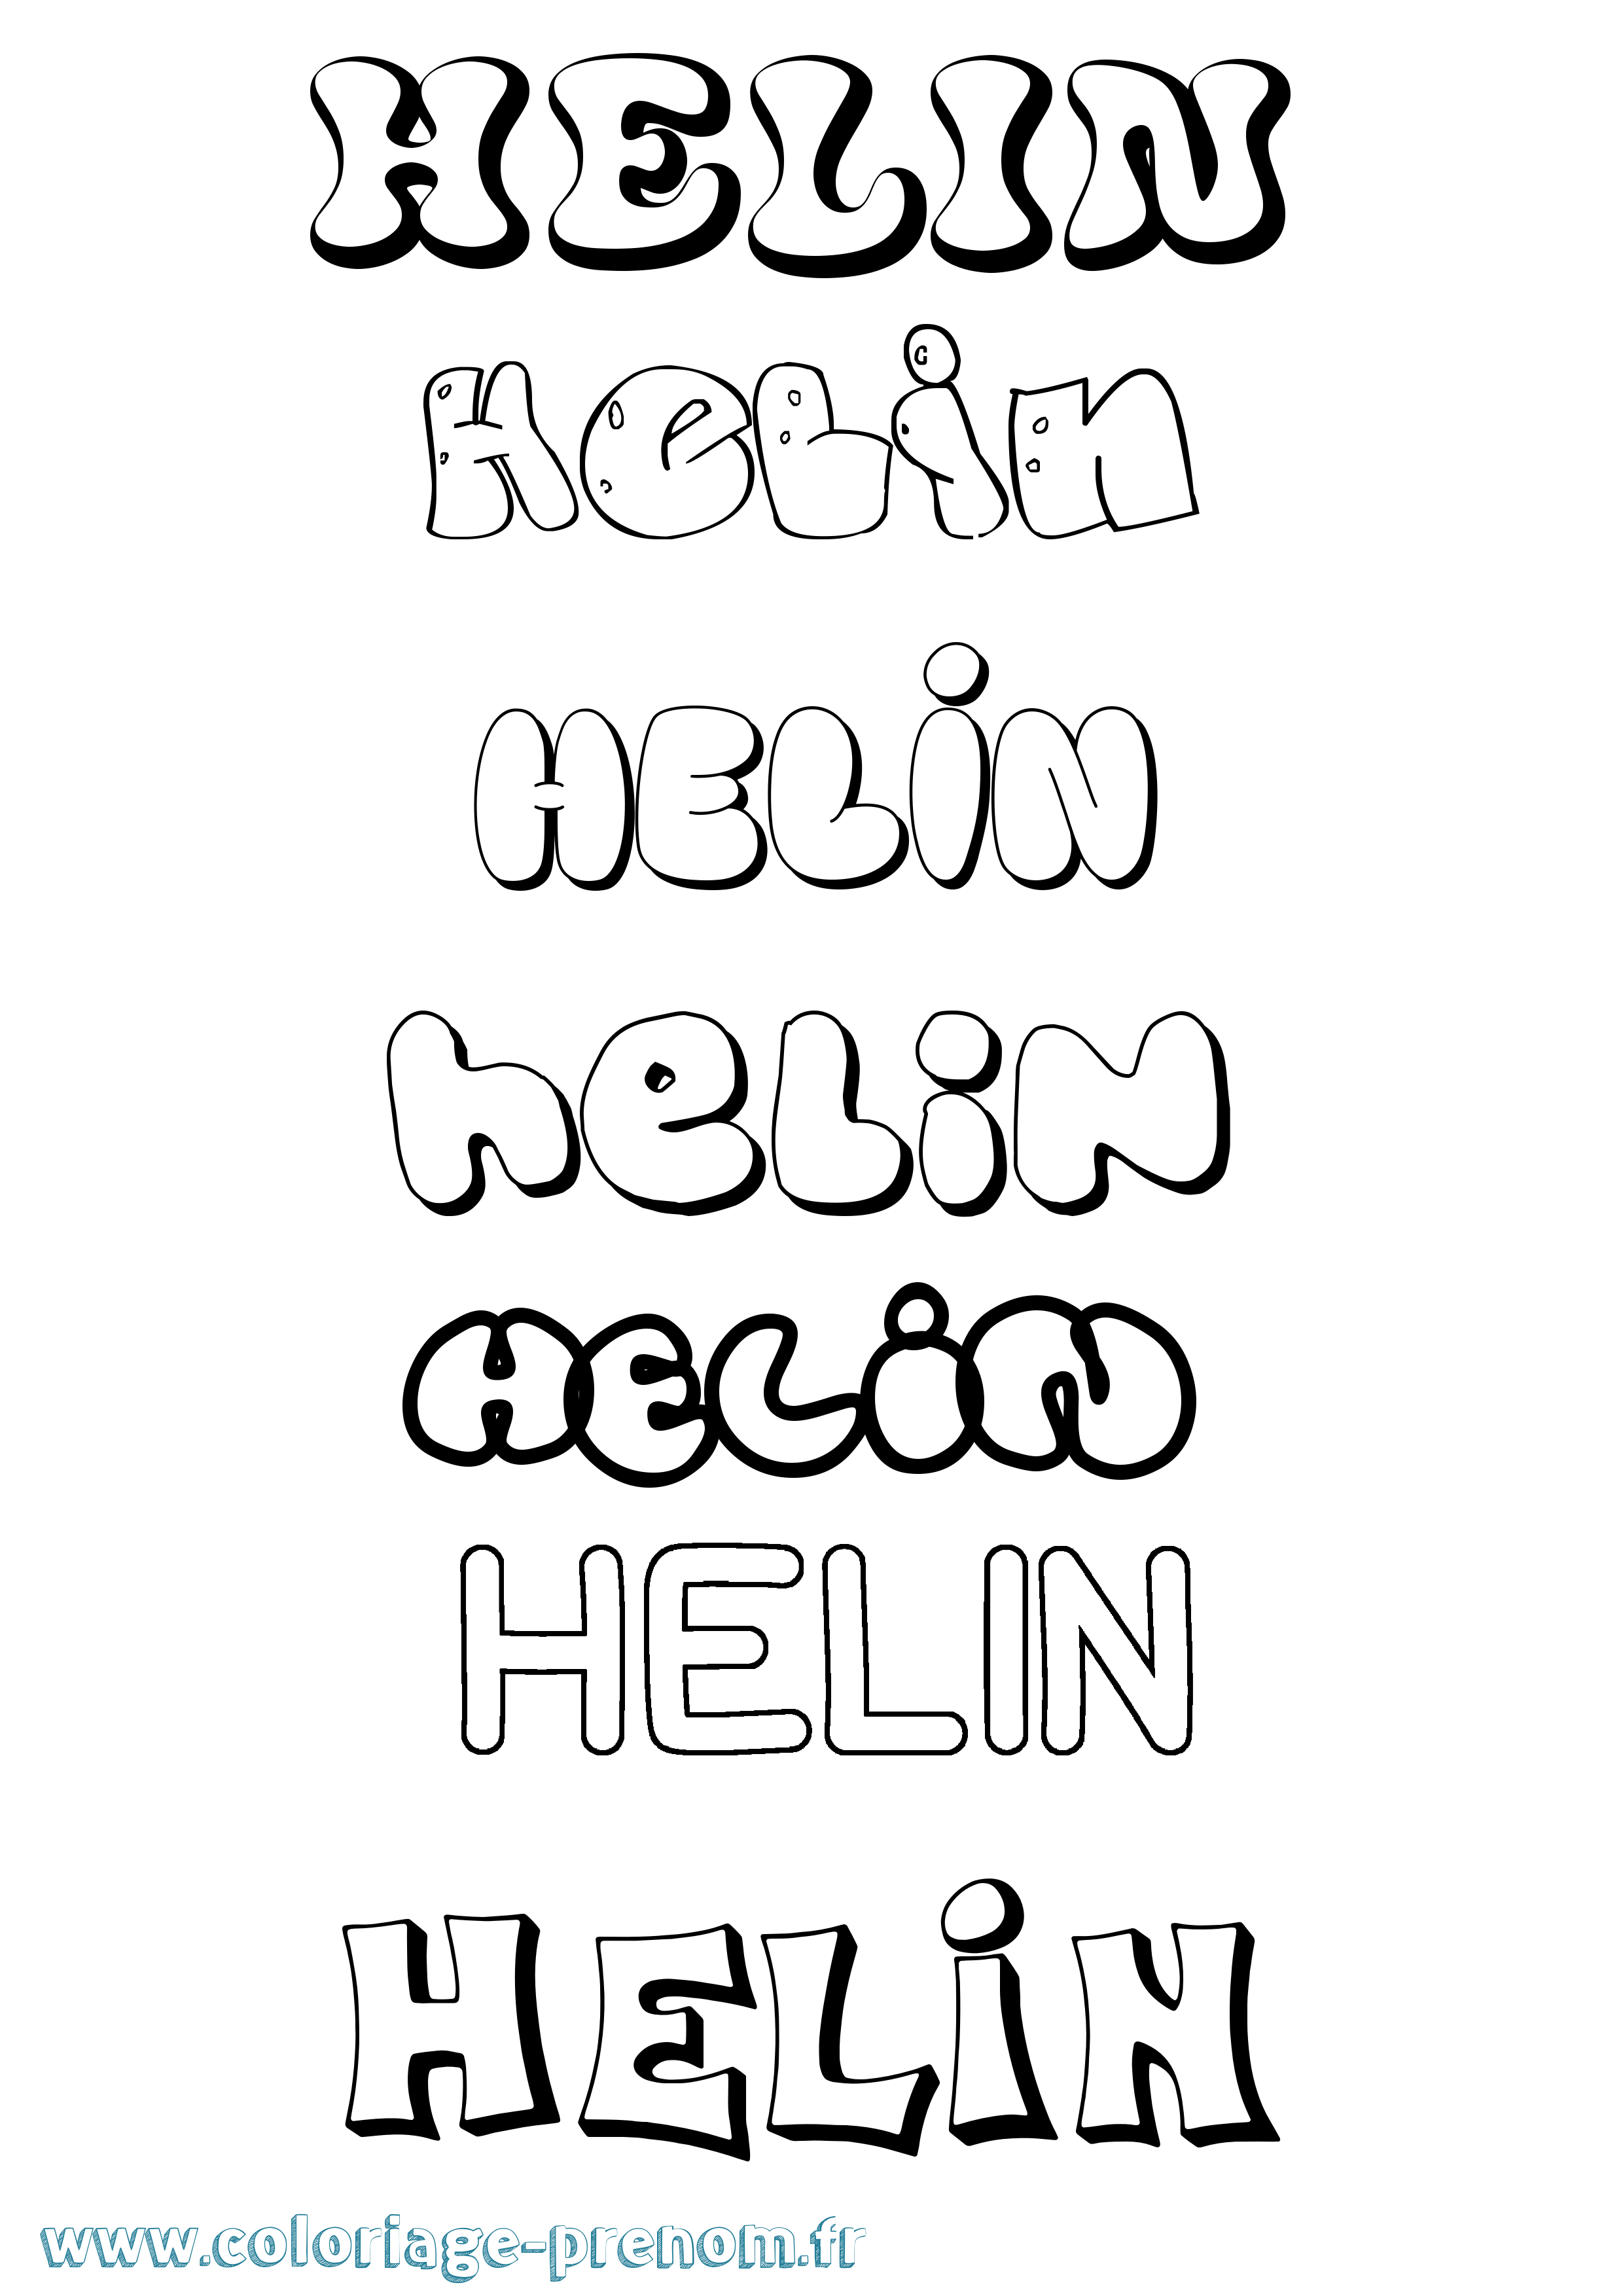 Coloriage prénom Helin Bubble